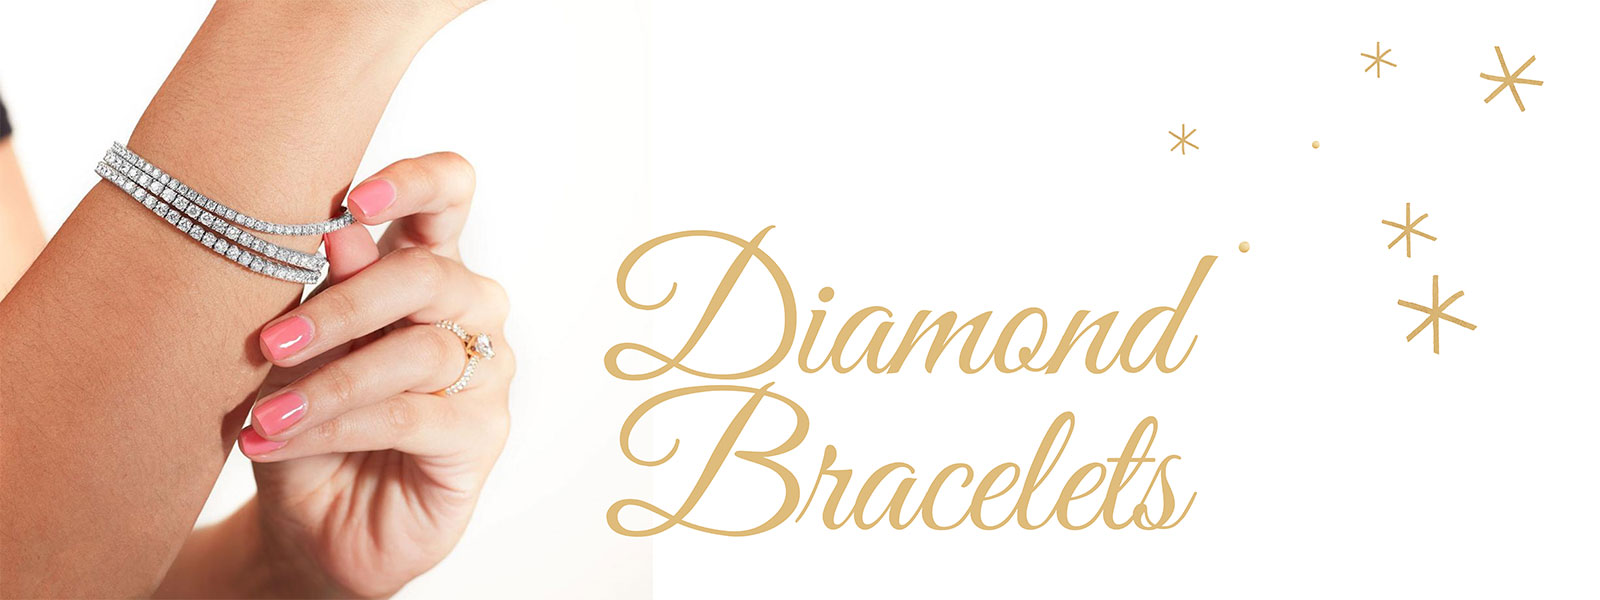 DIAMOND BRACELET